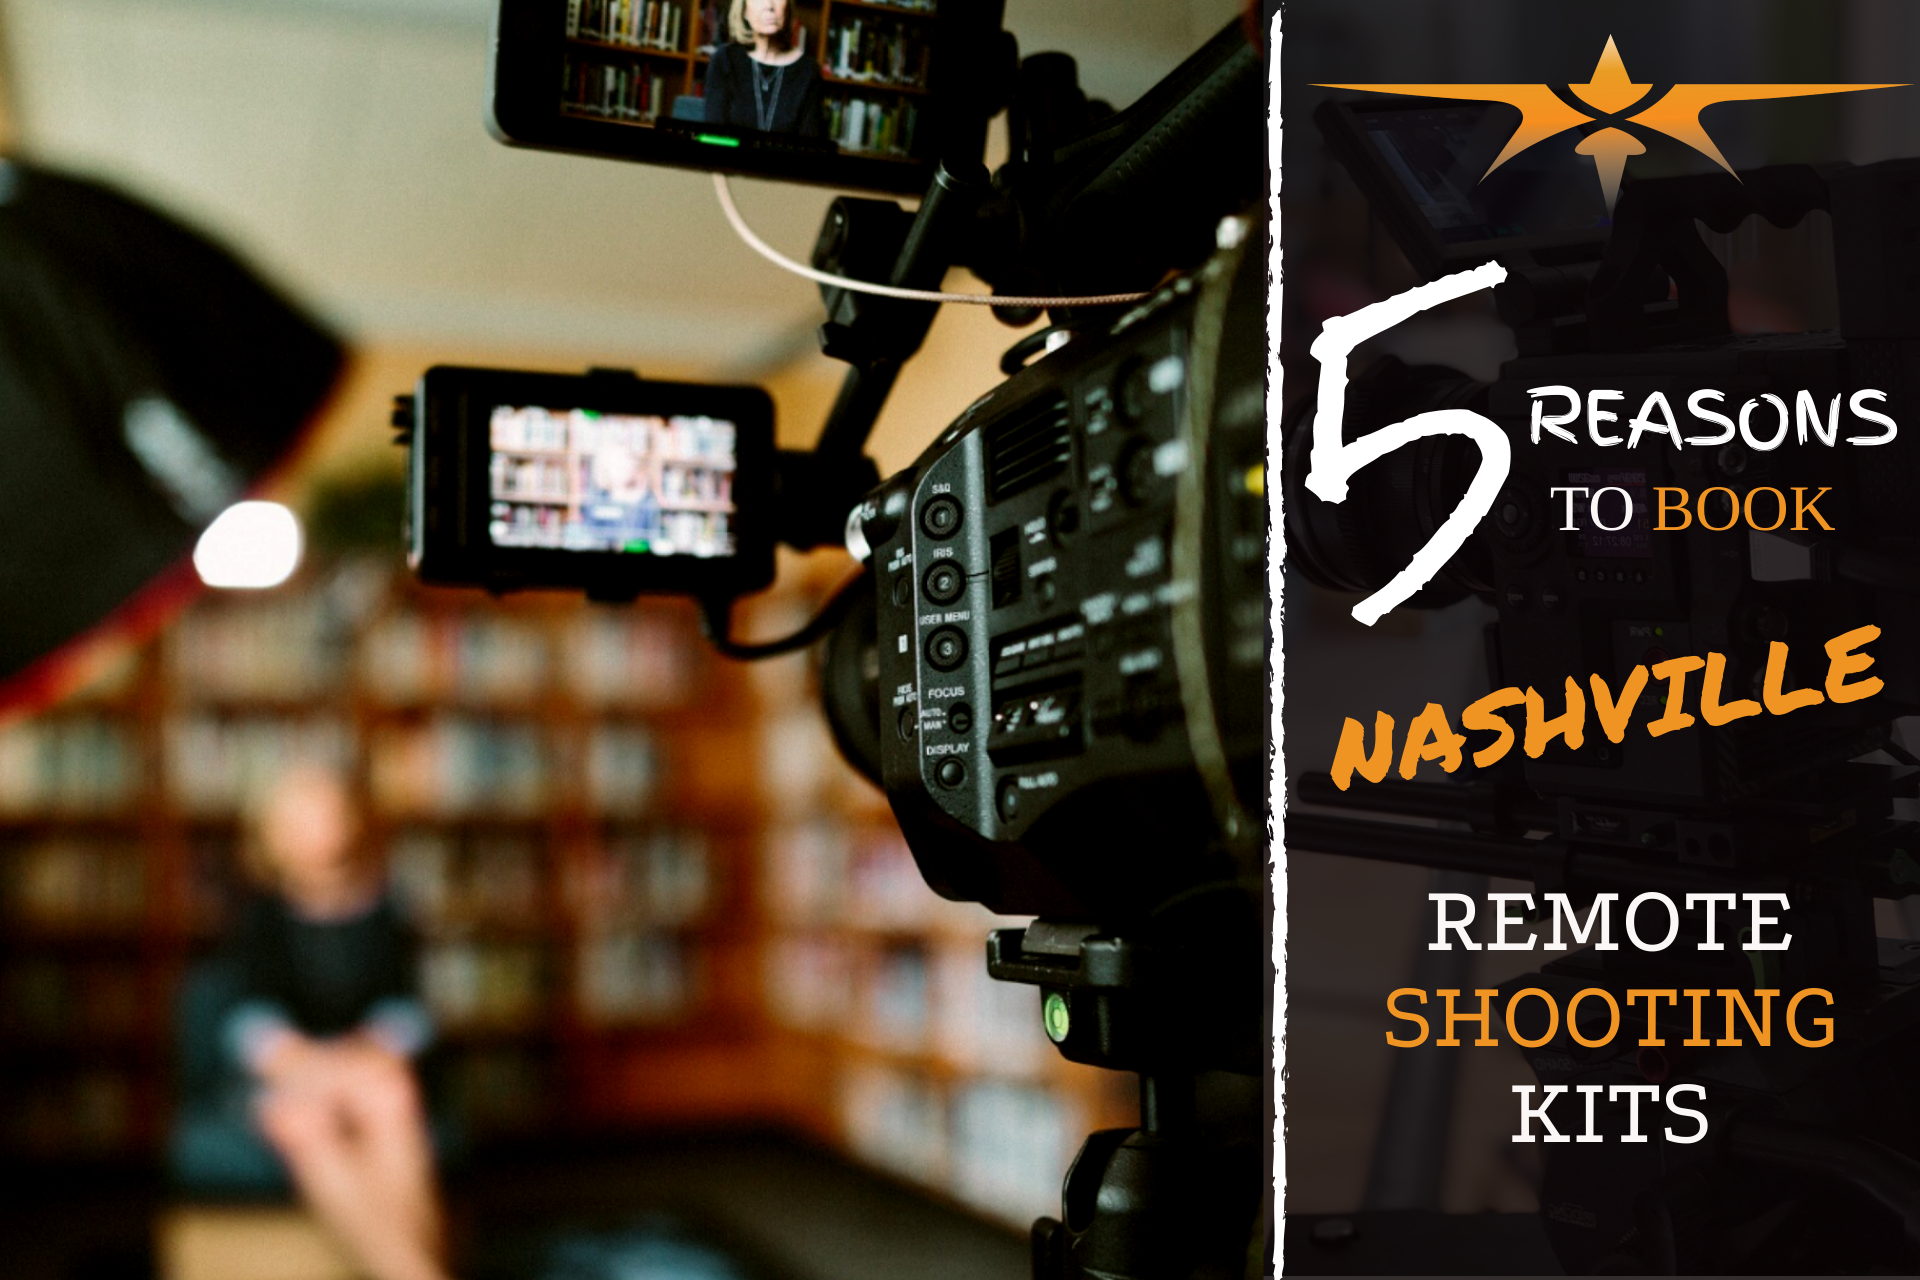 5 reasons to book Nashville Remote Shooting Kits